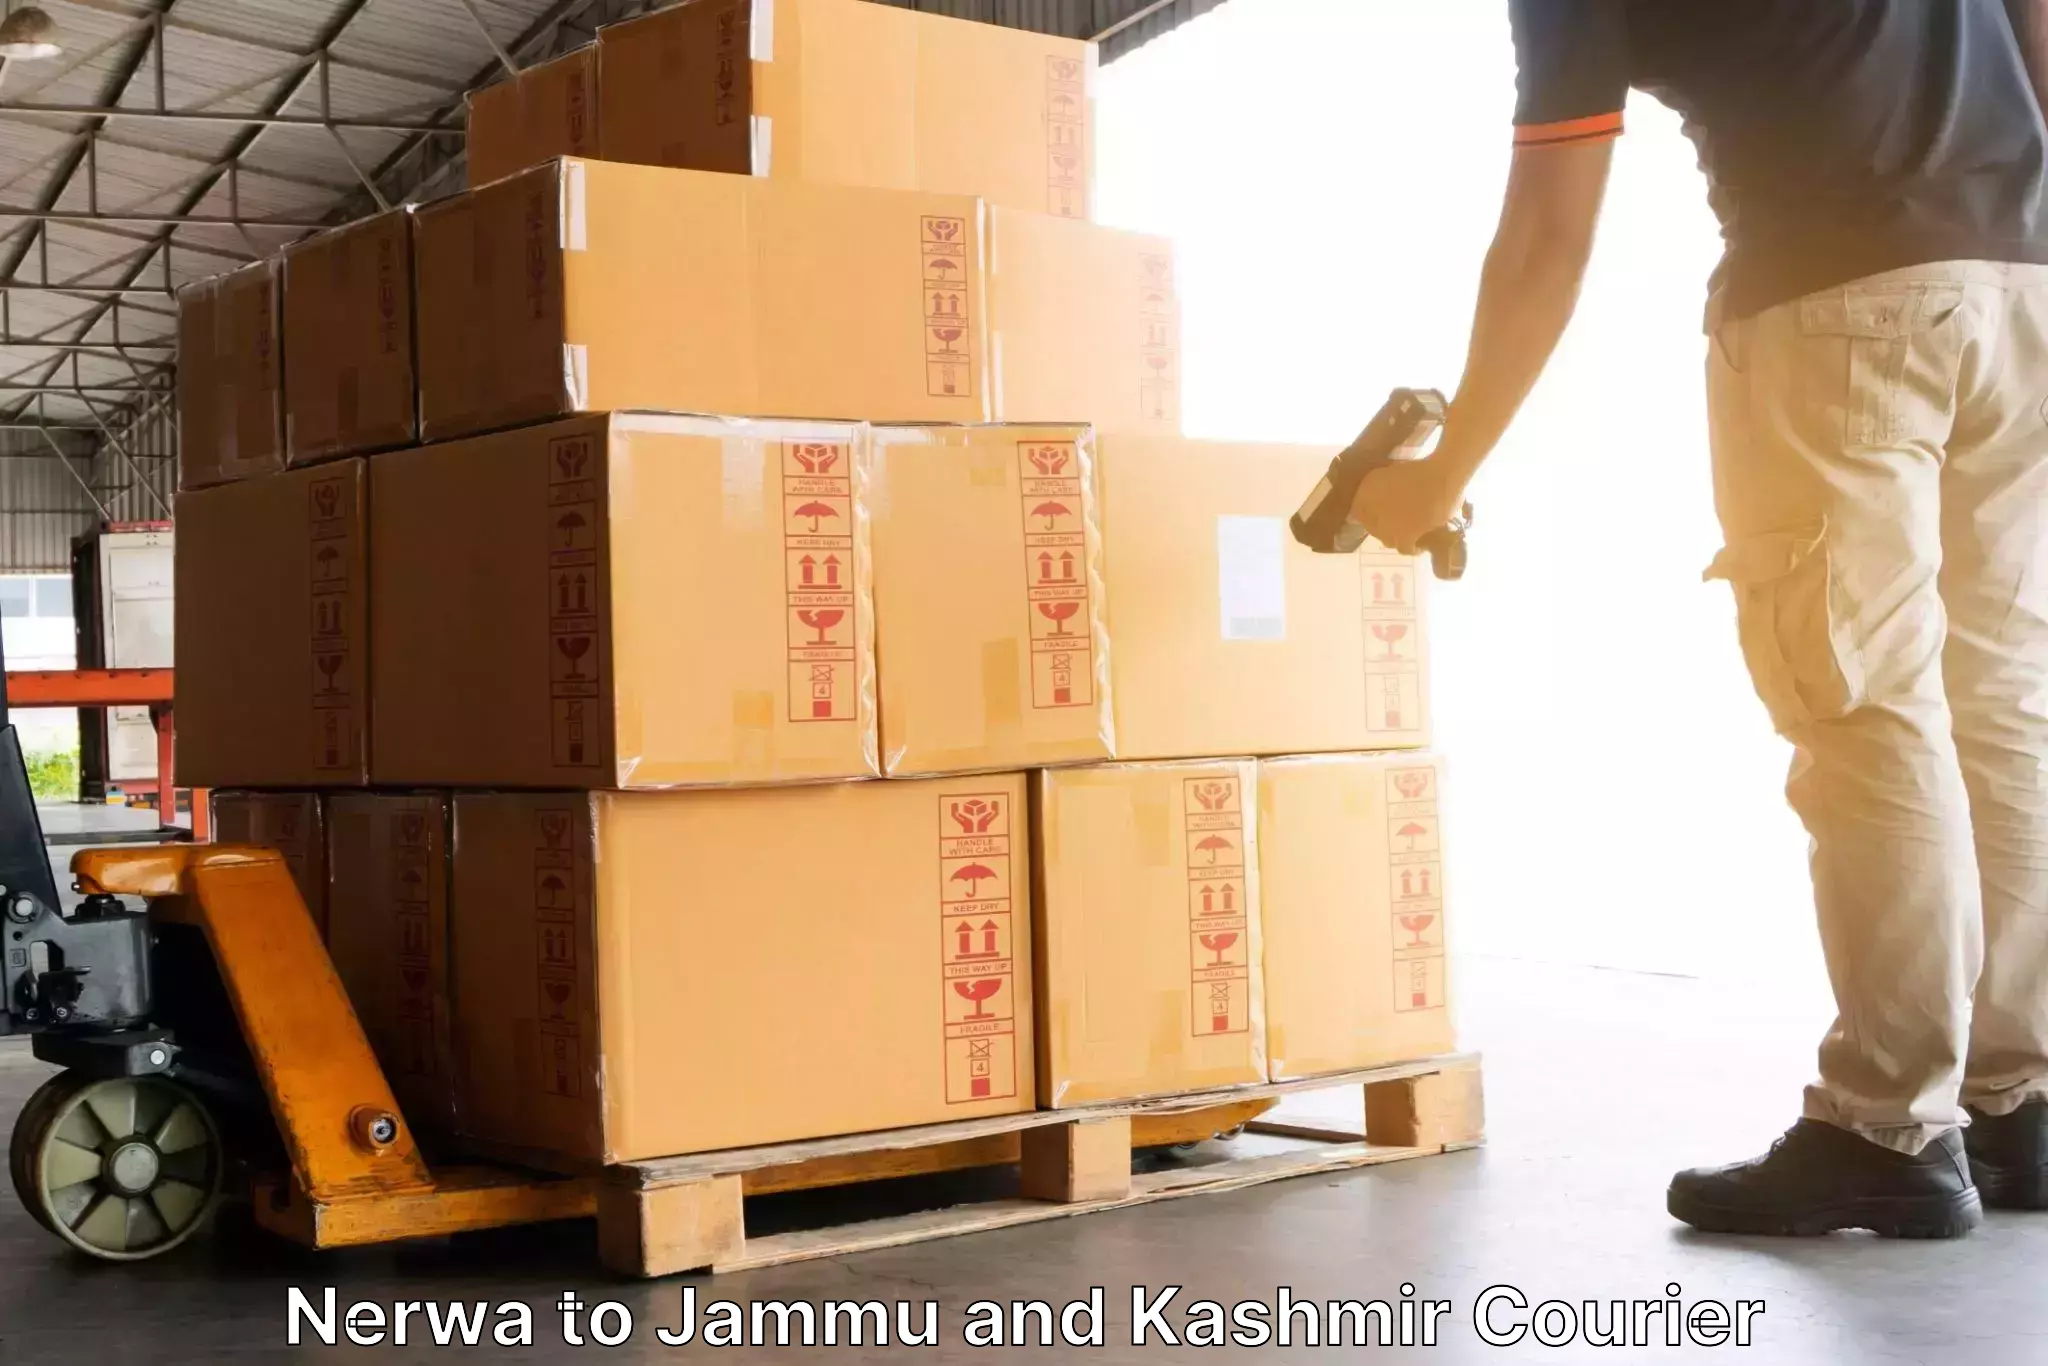 Logistics efficiency in Nerwa to Jammu and Kashmir